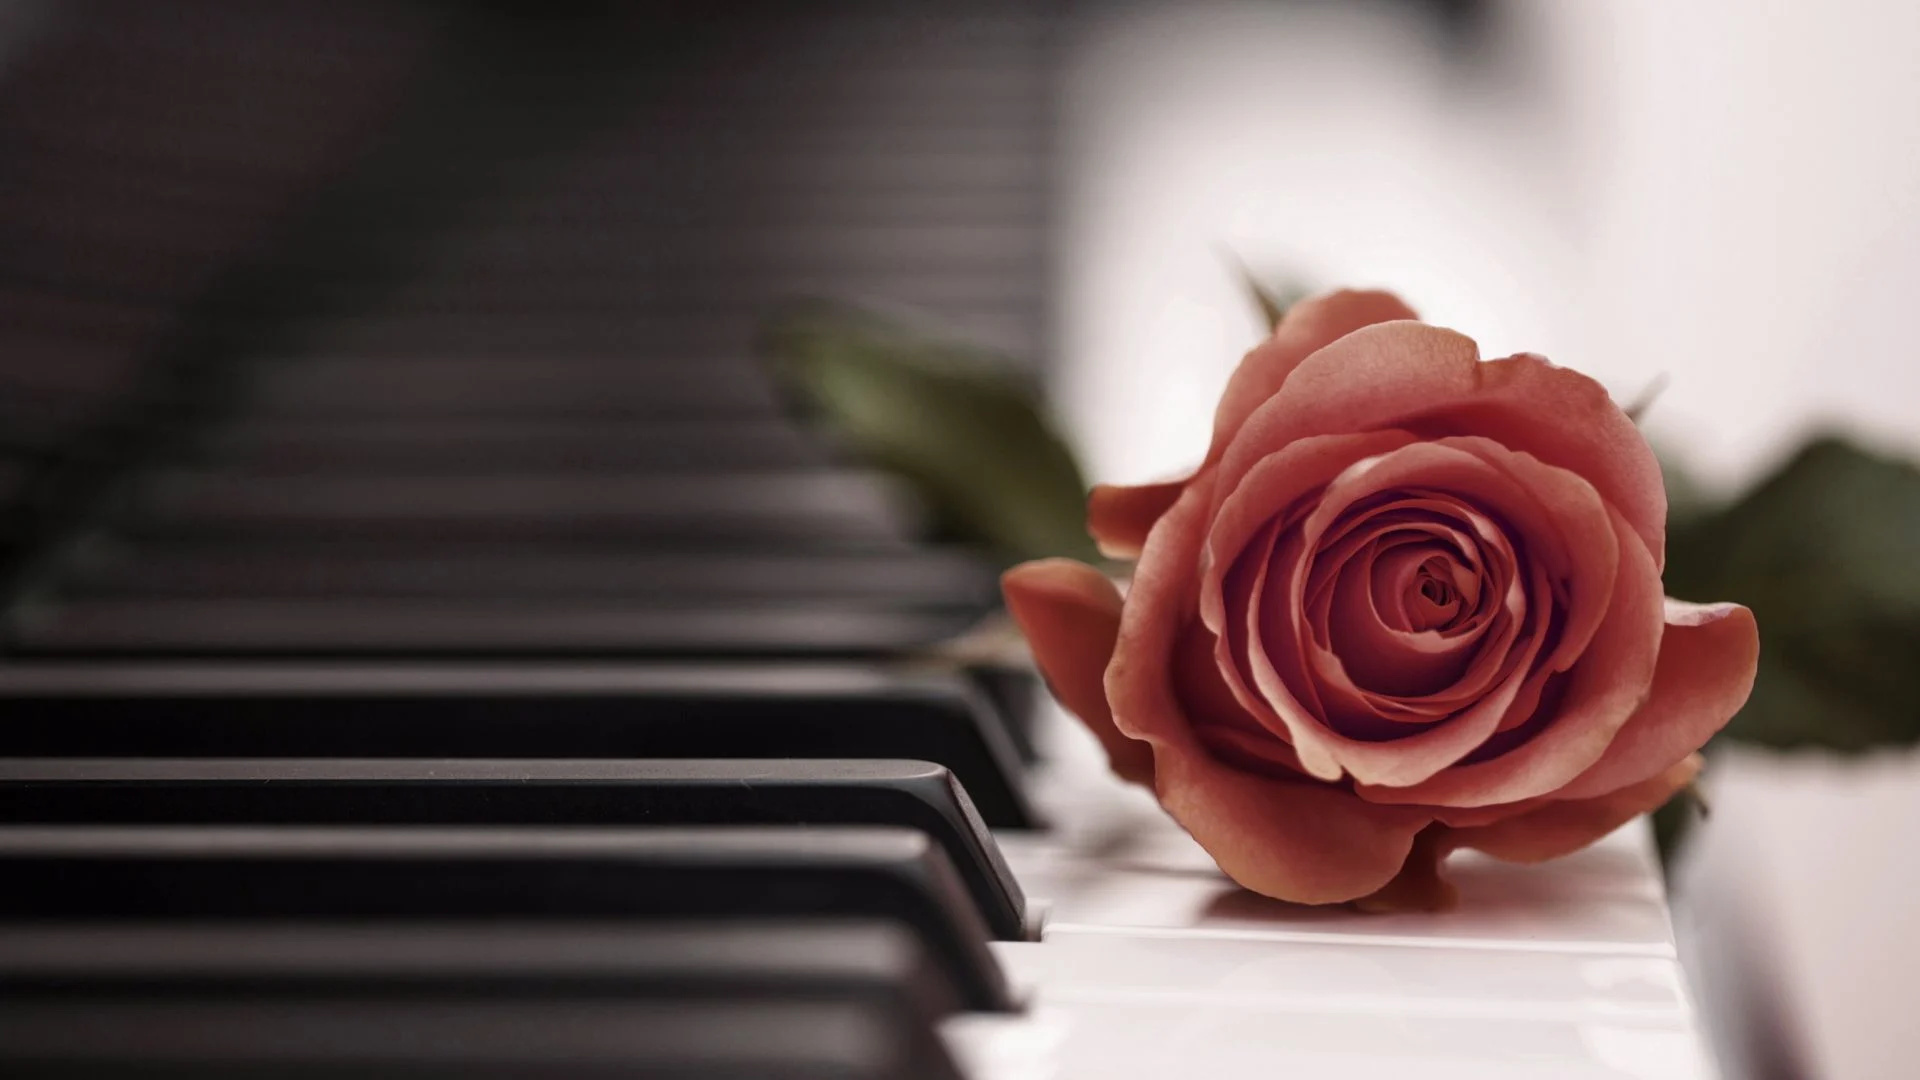 Piano: Tea Rose On Keys, Classical Musical Instrument, Bicolored Keys. 1920x1080 Full HD Wallpaper.